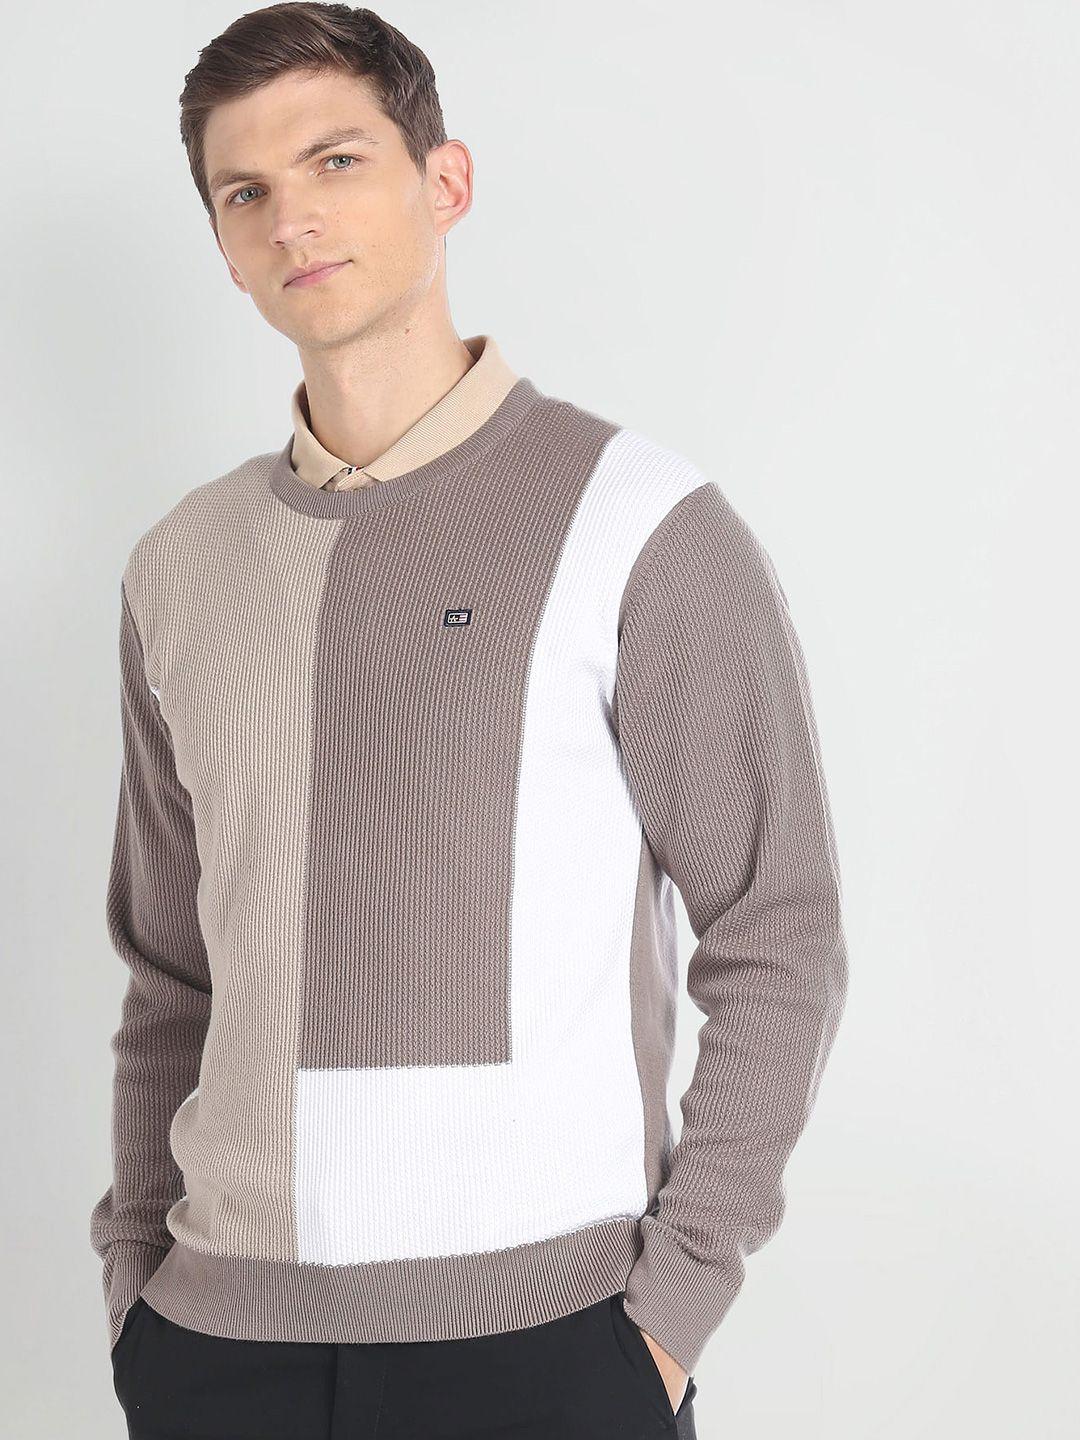 arrow sport colourblocked cotton pullover sweater